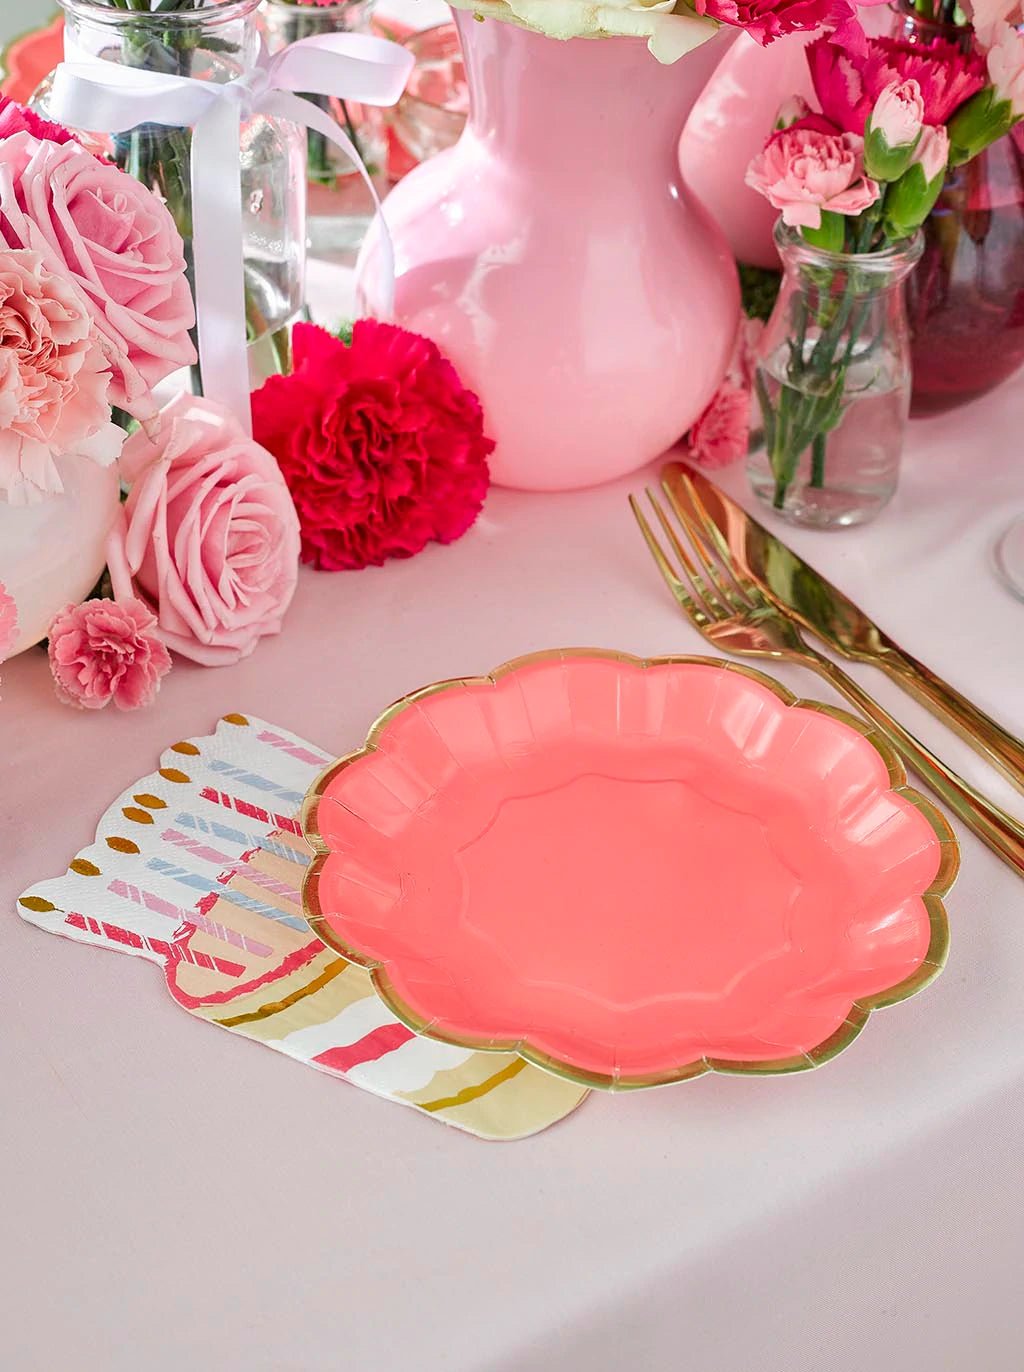 Rose Pink Party Plates - Oh My Darling Party Co-bohoboho partybotanical #Fringe_Backdrop#